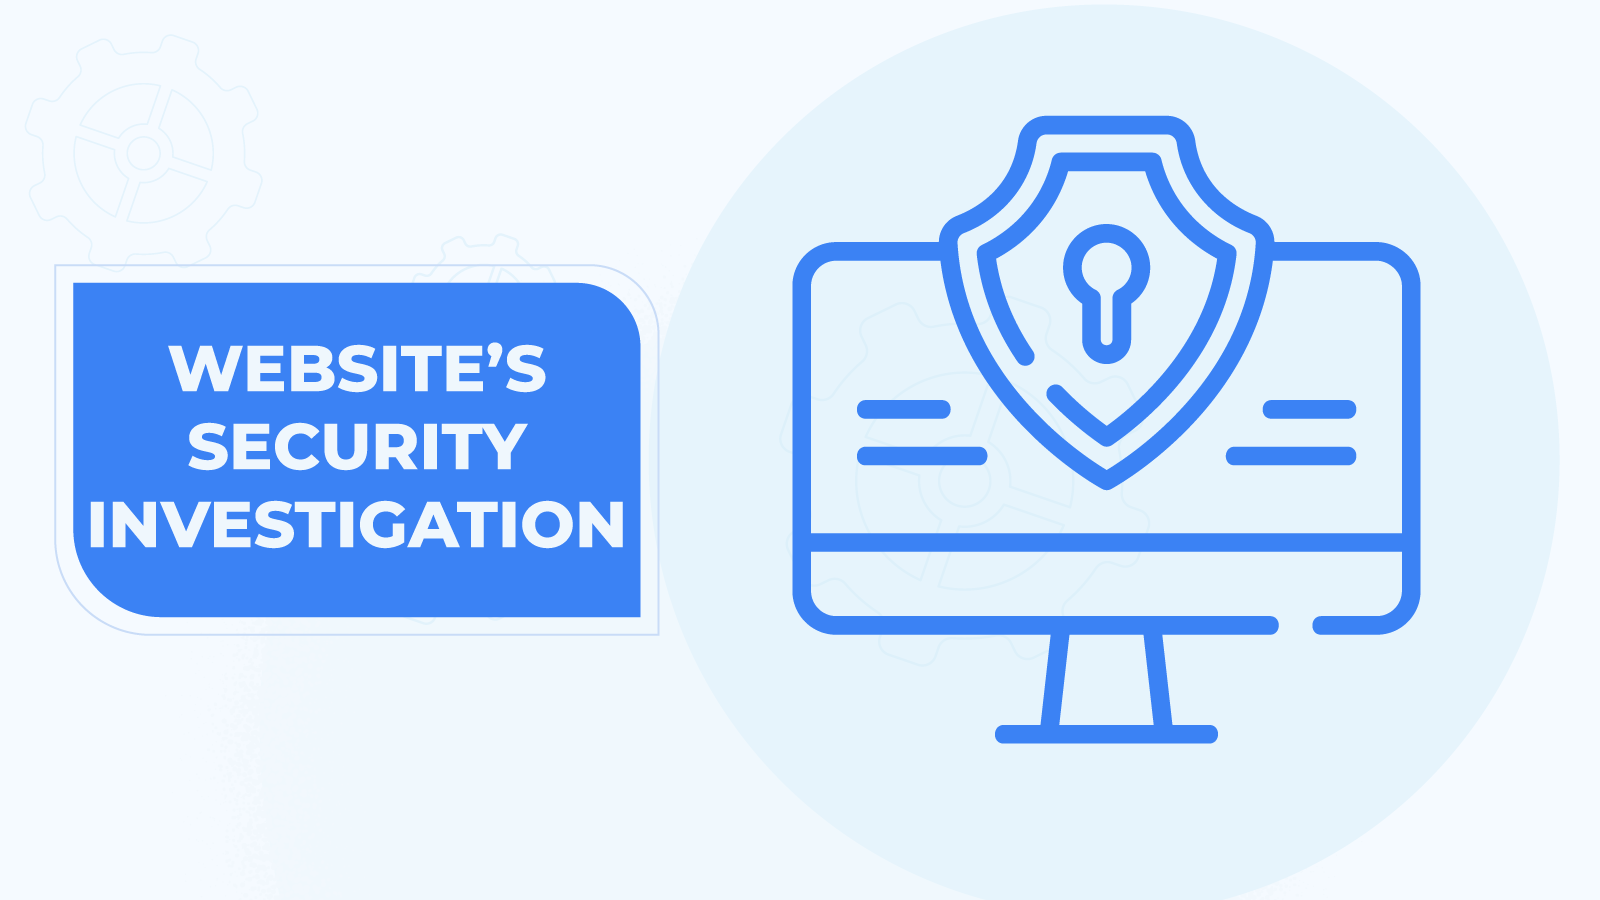 Website’s Security Investigation